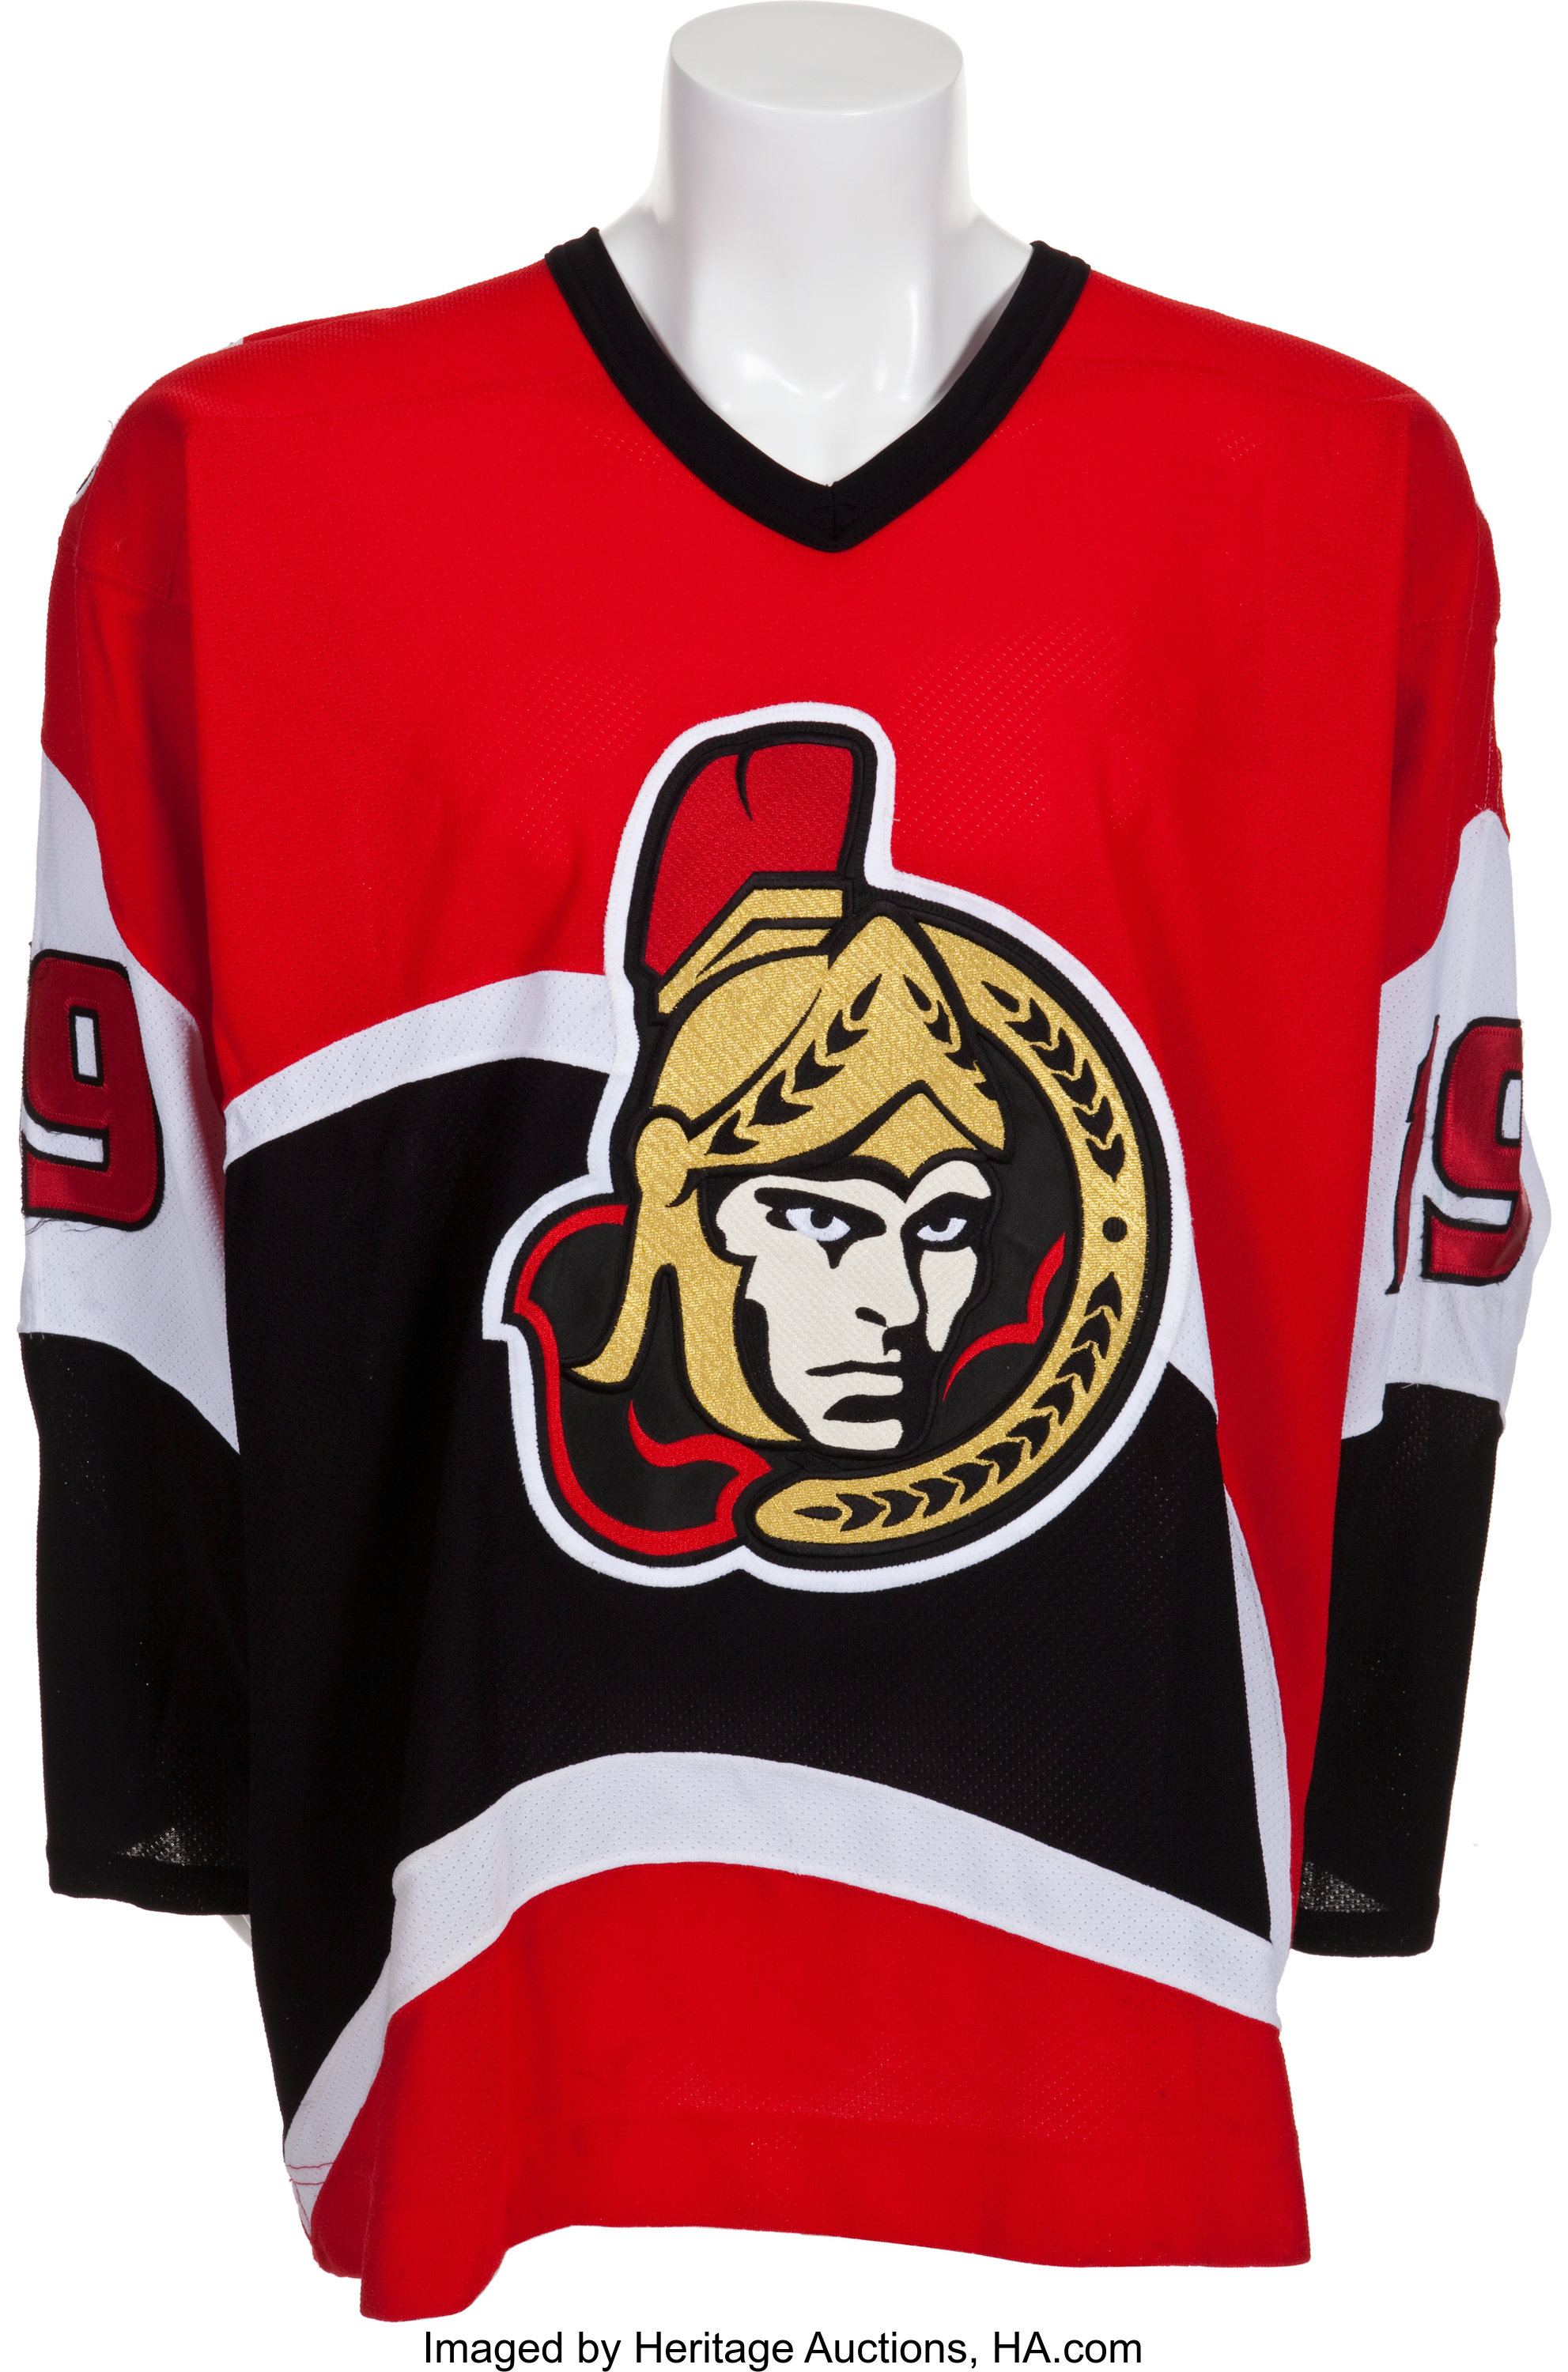 NEW JERSEY DAY - Ottawa Senators Alt 'Sens' Jersey #19 Jason Spezza :  r/hockeyjerseys